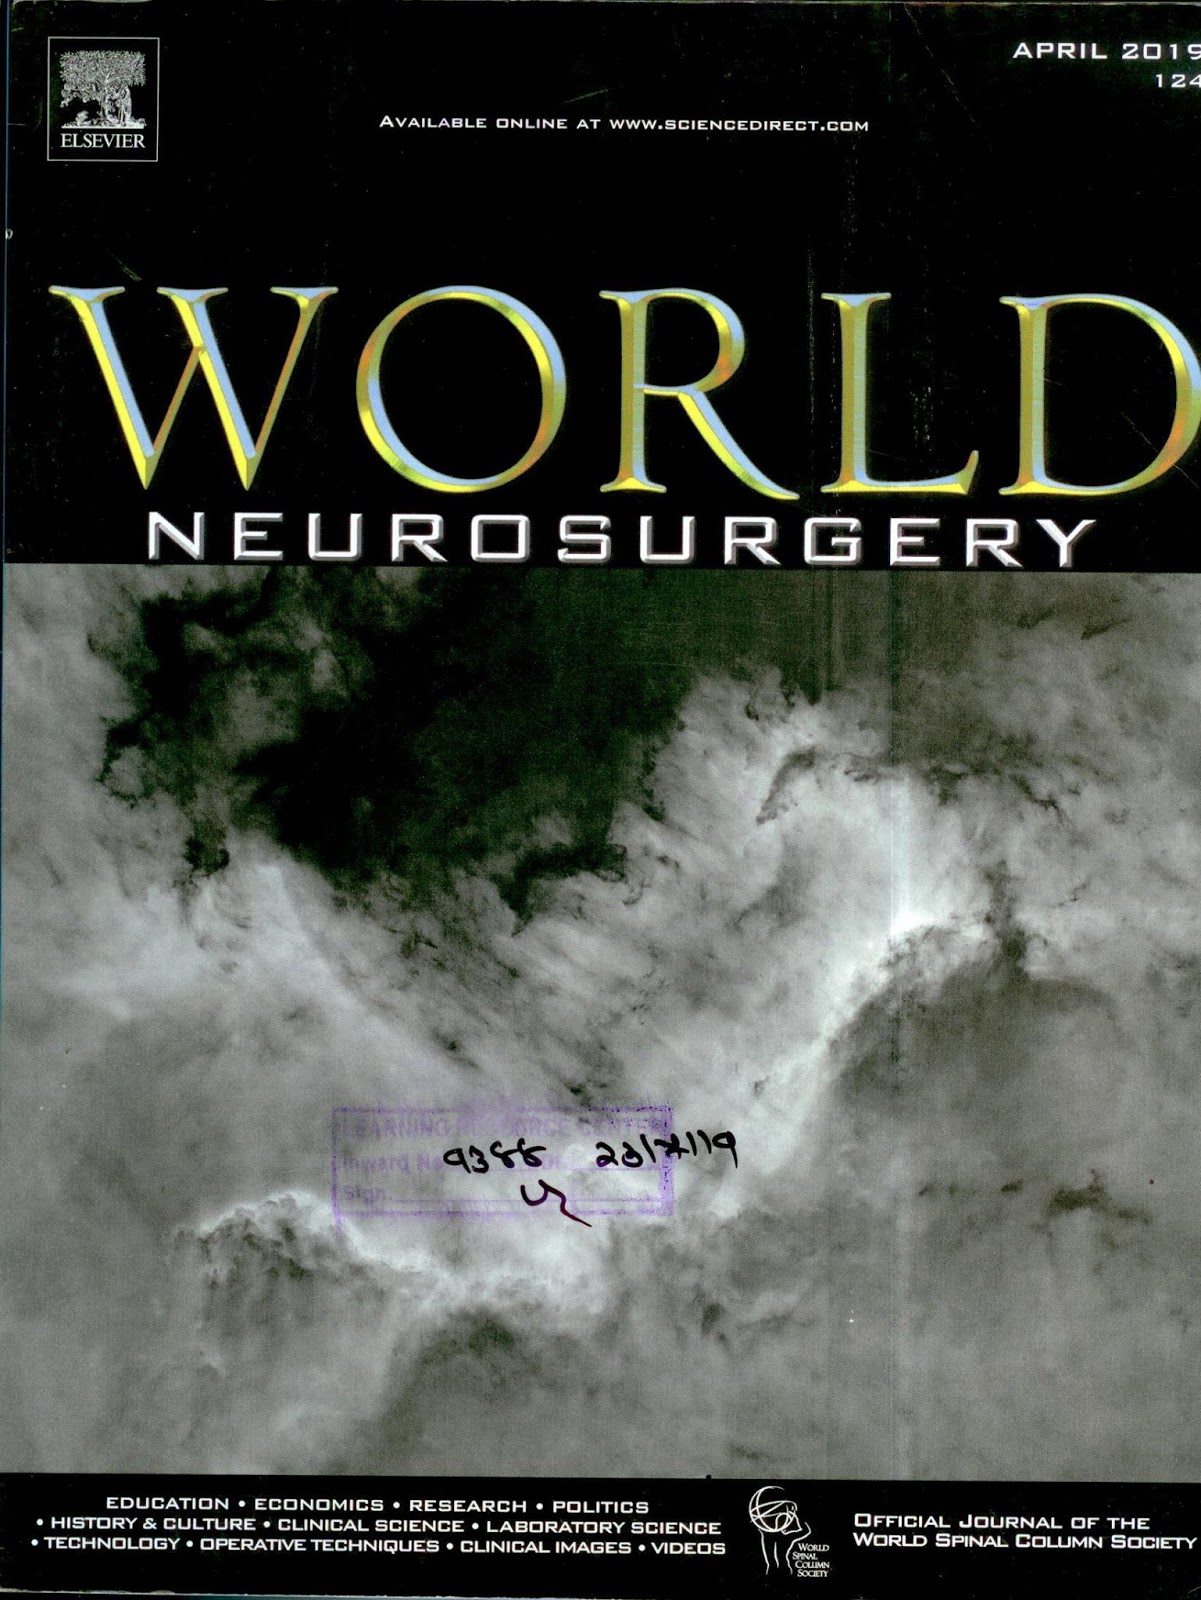 https://www.sciencedirect.com/journal/world-neurosurgery/vol/124/suppl/C